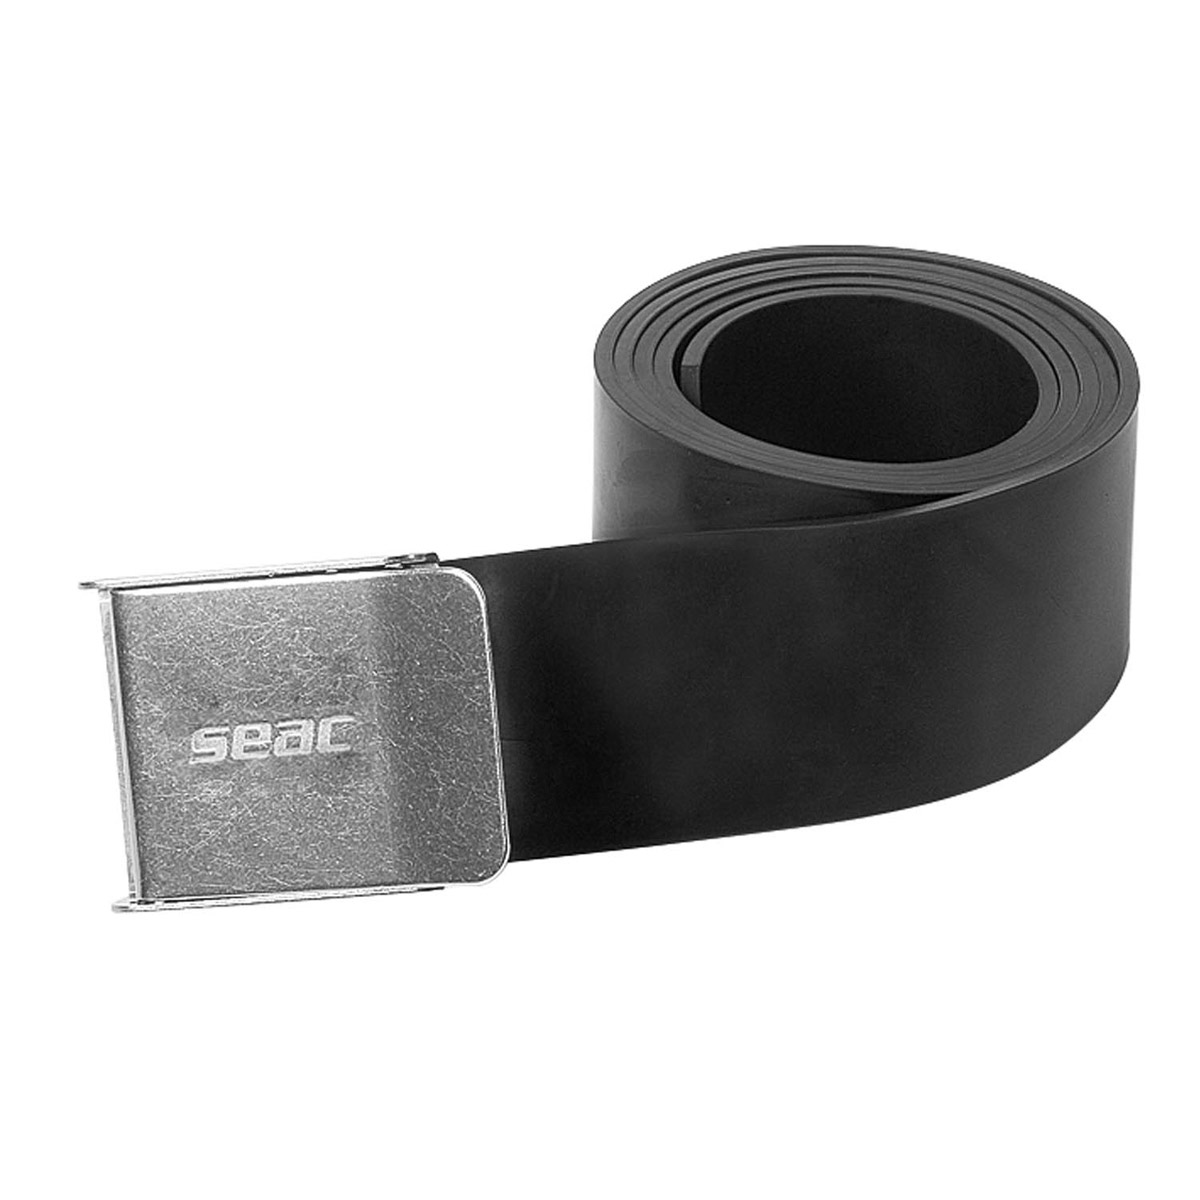 Seac Quick Release Rubber Weight Belt